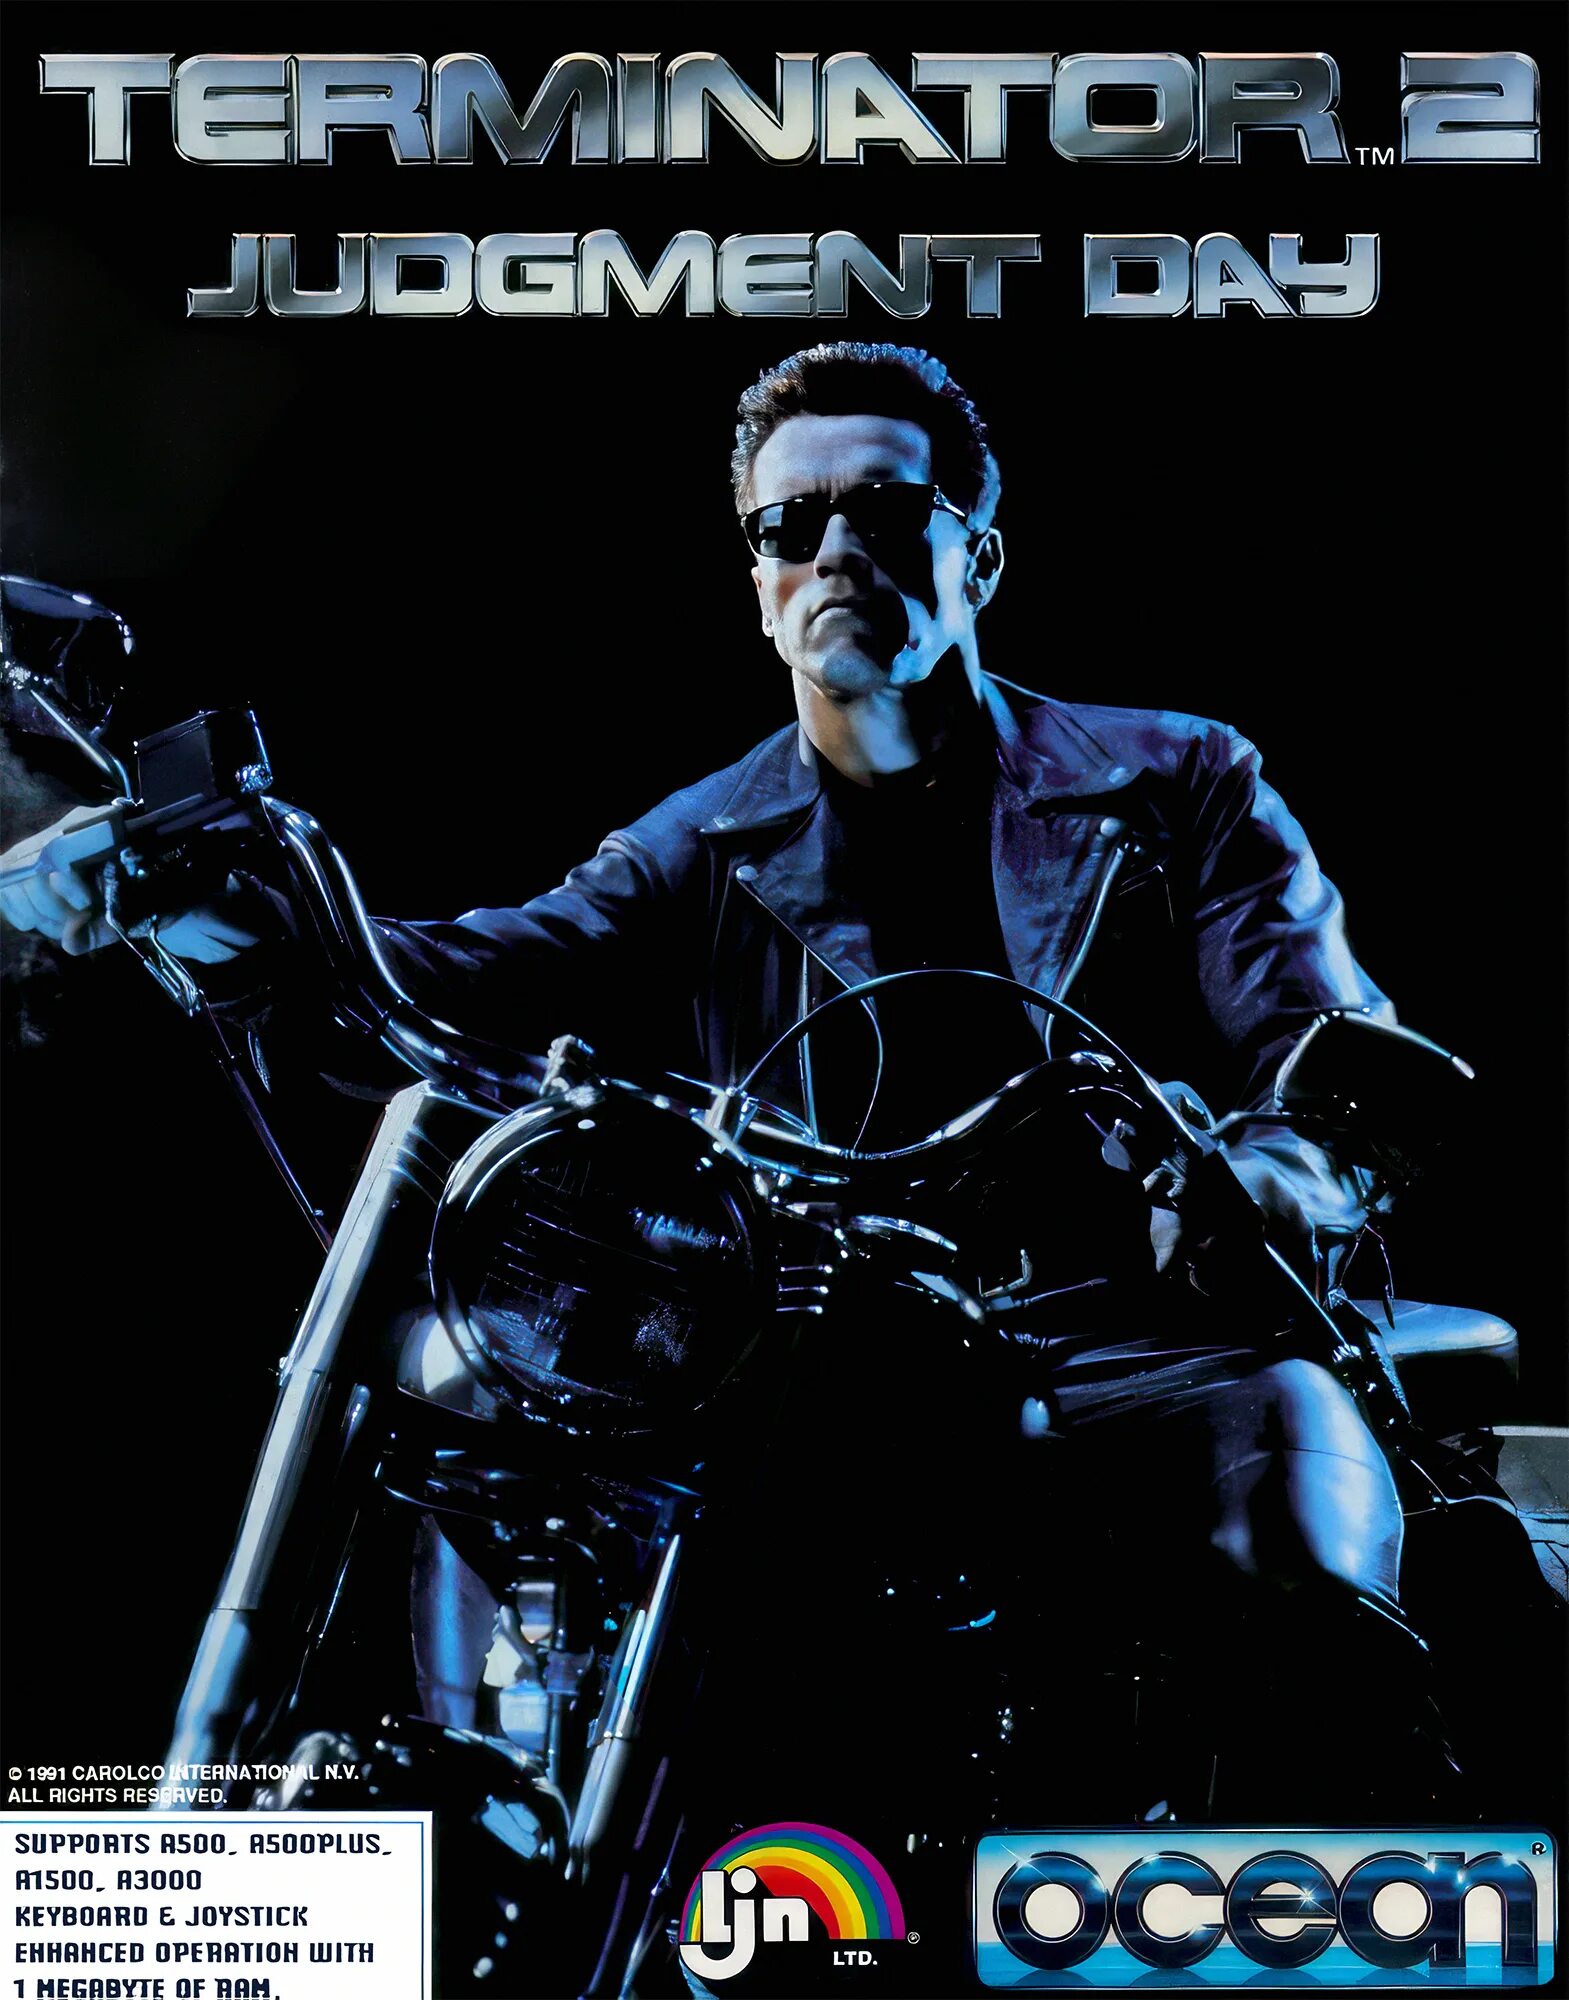 Шварценеггер Терминатор 2. Terminator 2 Judgment Day игра 1991. Terminator 2 Judgment Day Snes обложка. Terminator 2 Judgment Day Sega обложка.